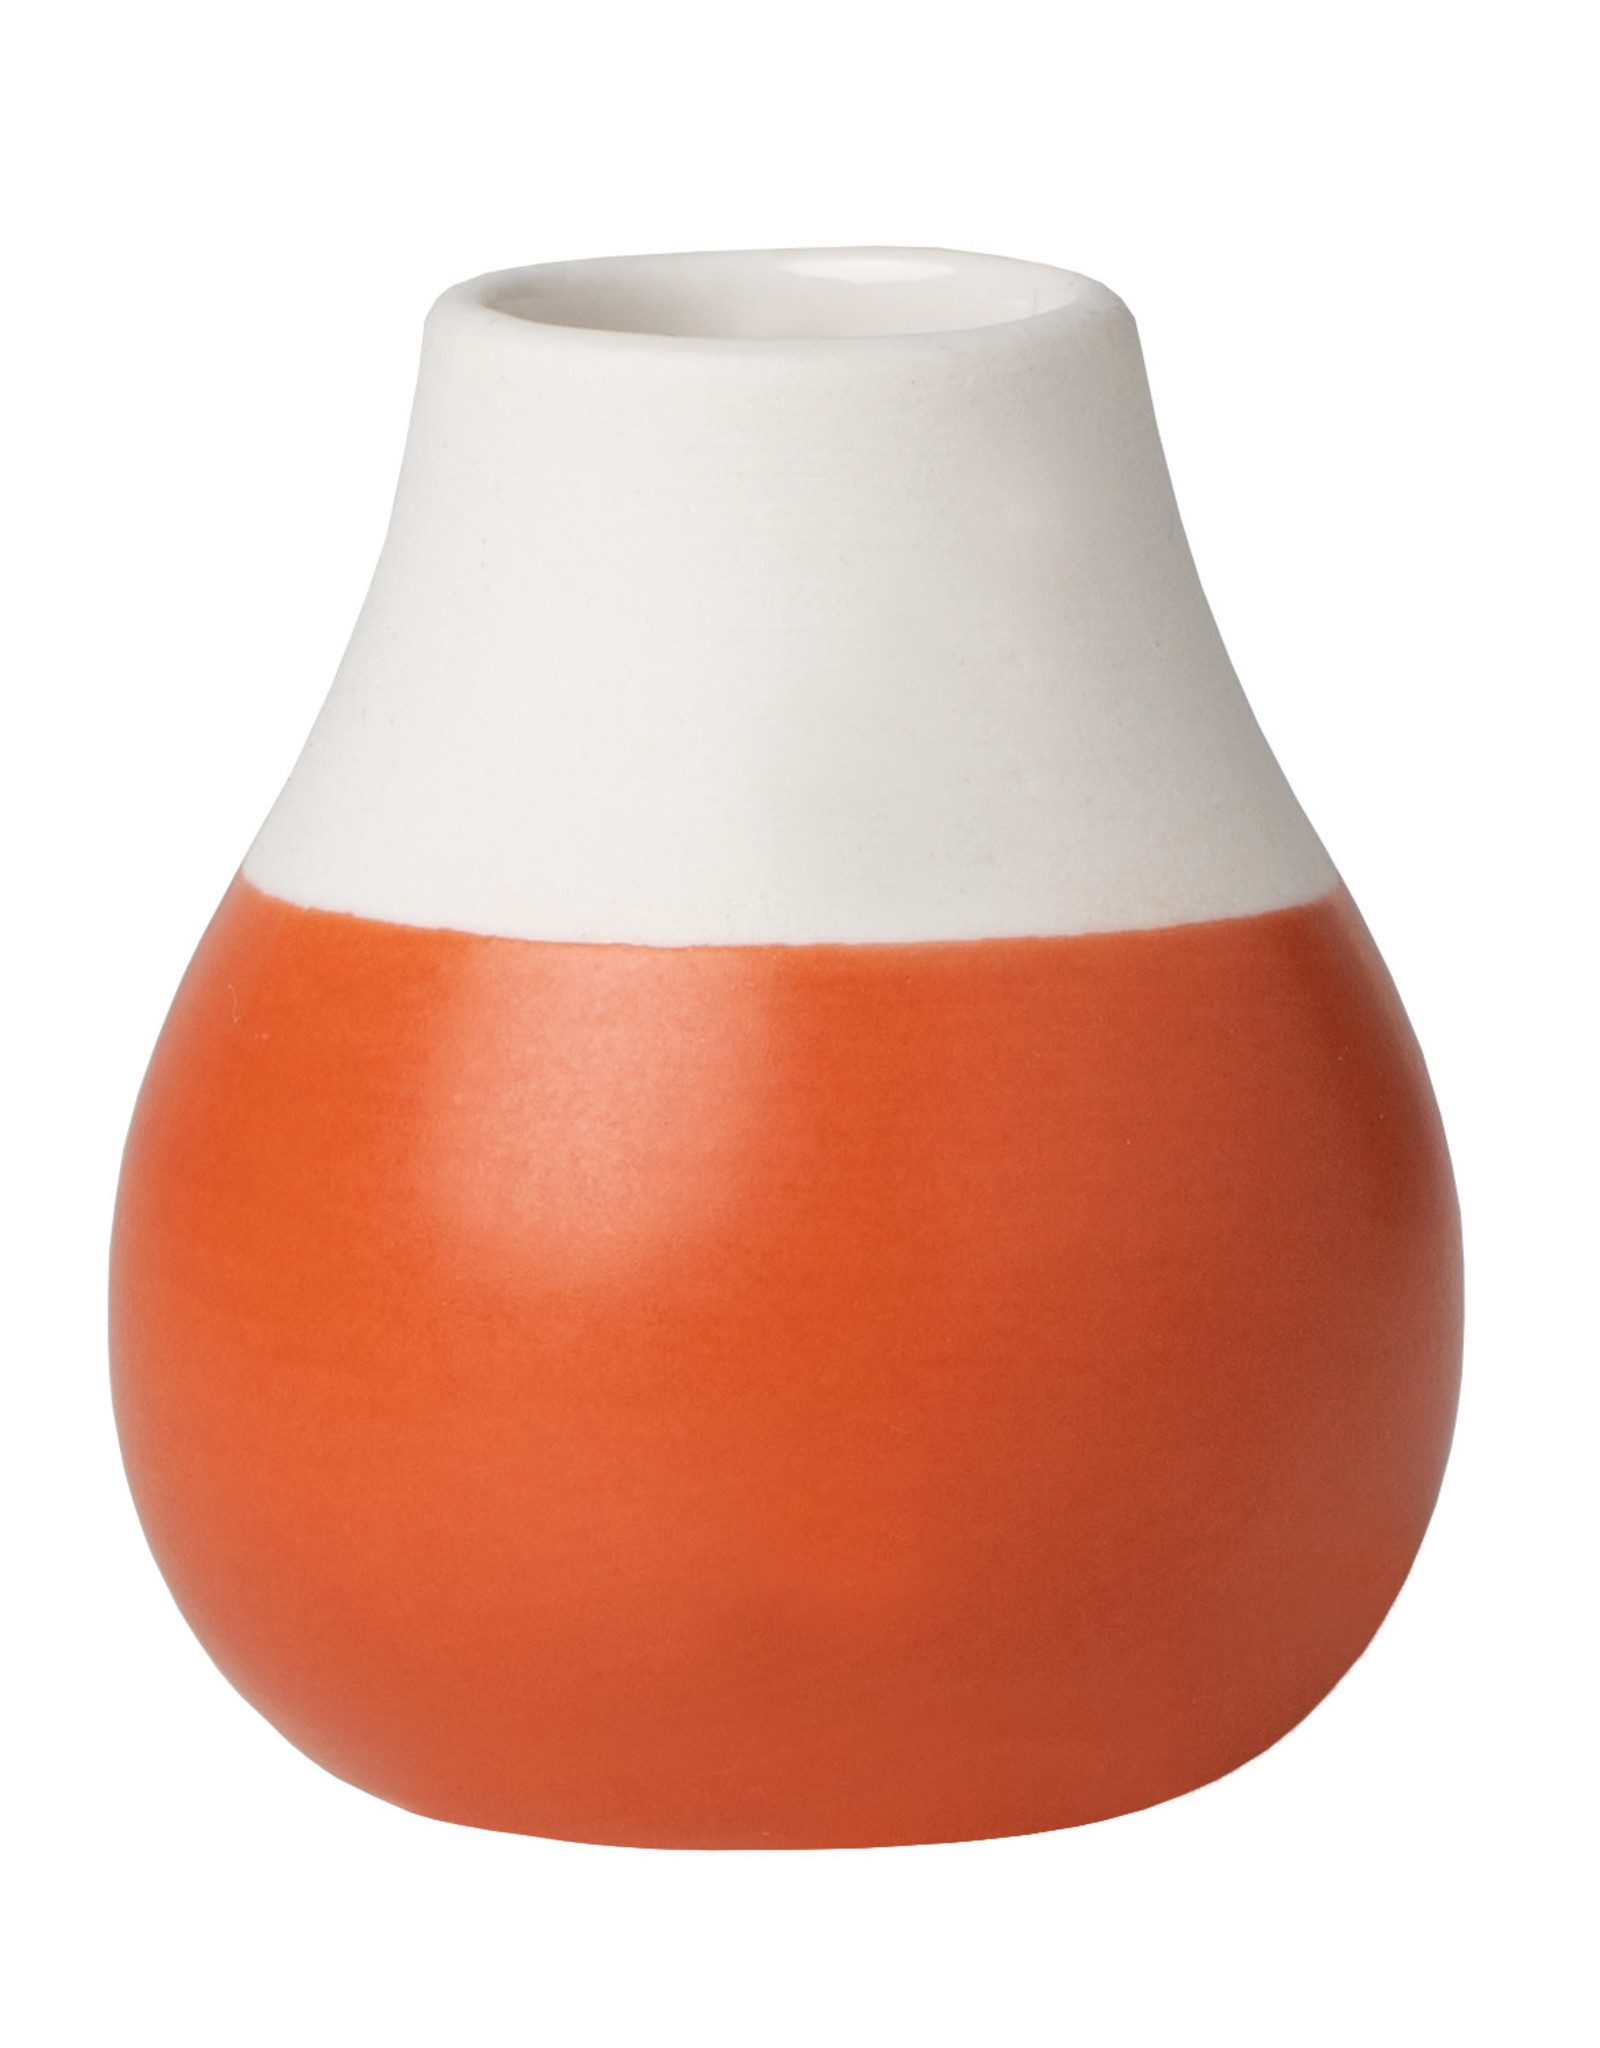 Raeder Plukselvaasjes Oranje - set v 4 - Hoogte 4 - 8 cm